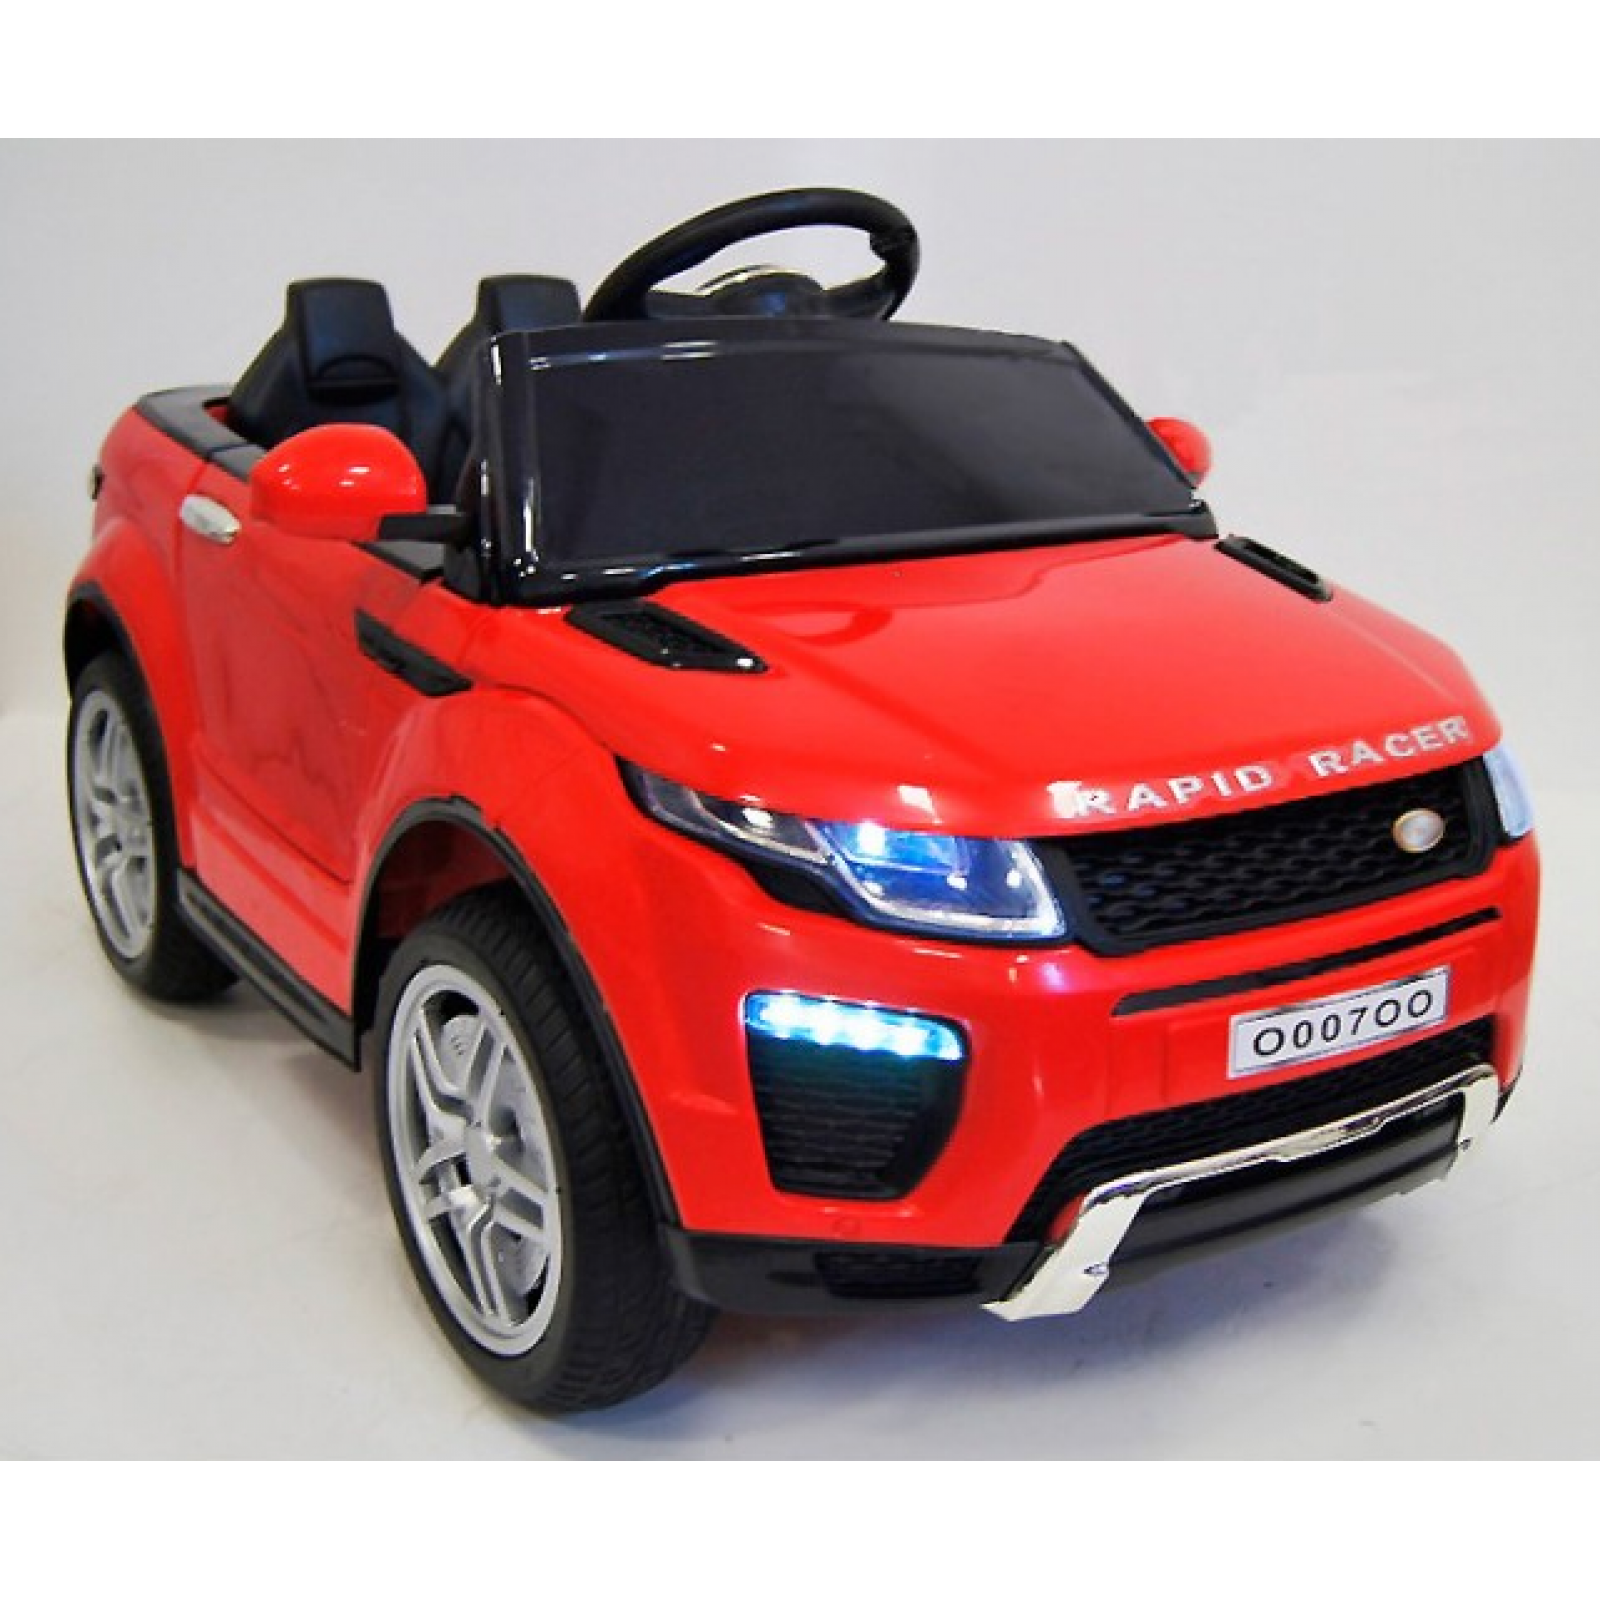 Детский электромобиль Range-Rover (O007OO) VIP